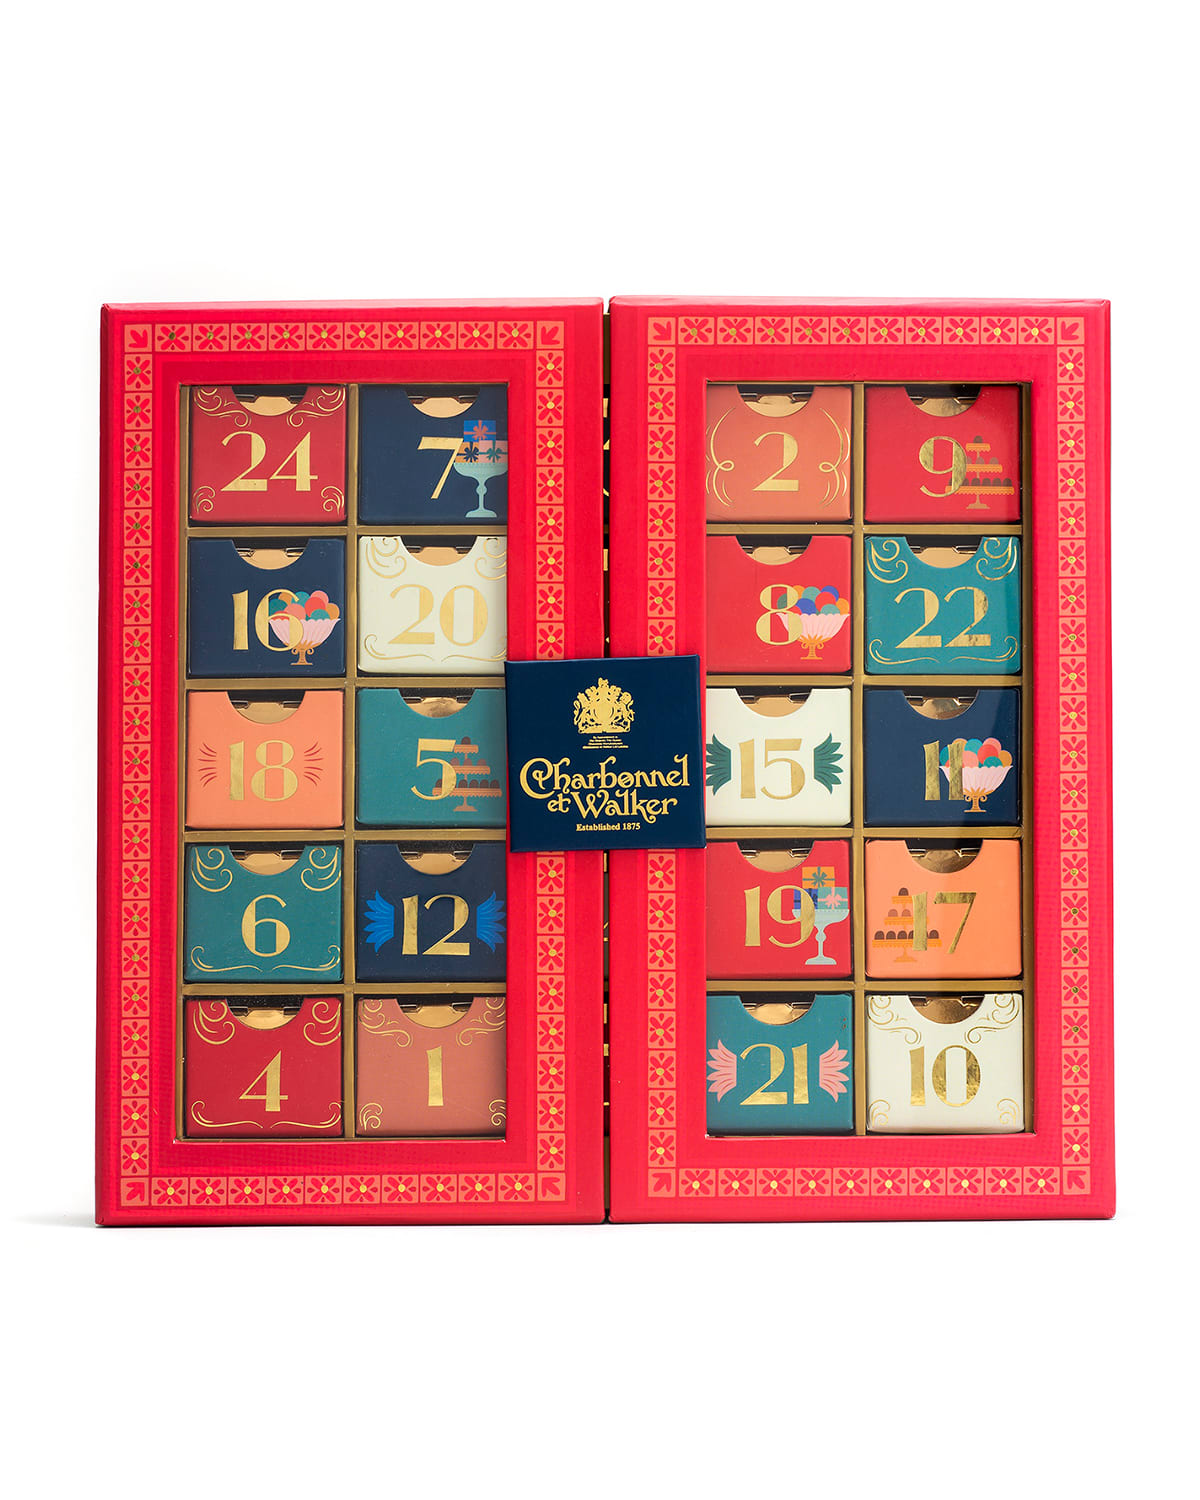 Charbonnel Et Walker Chocolate And Truffle Advent Calendar